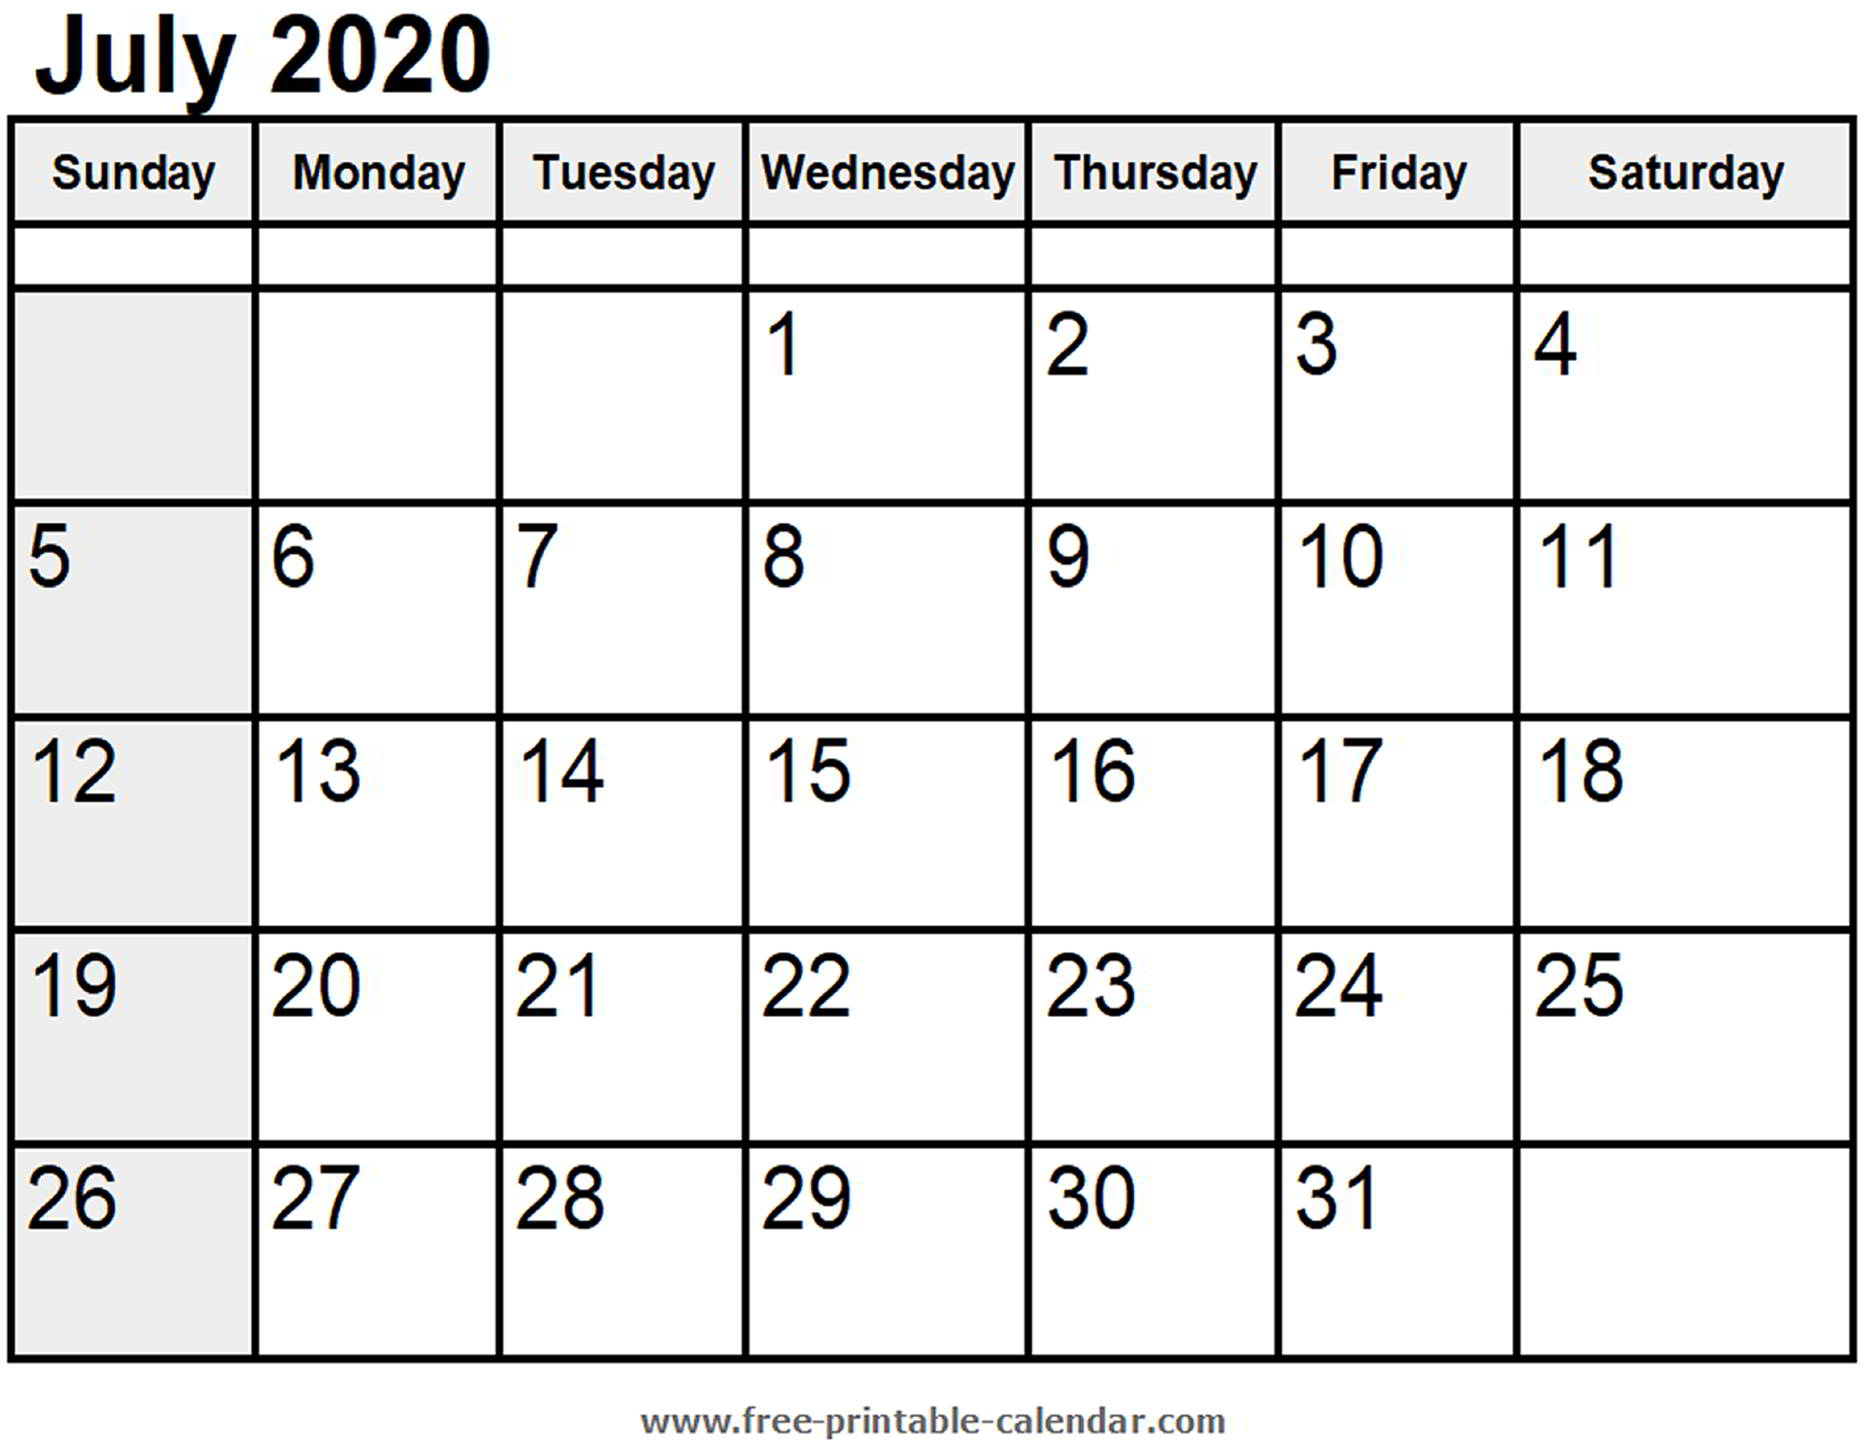 Calendar July 2020 - Free-Printable-Calendar